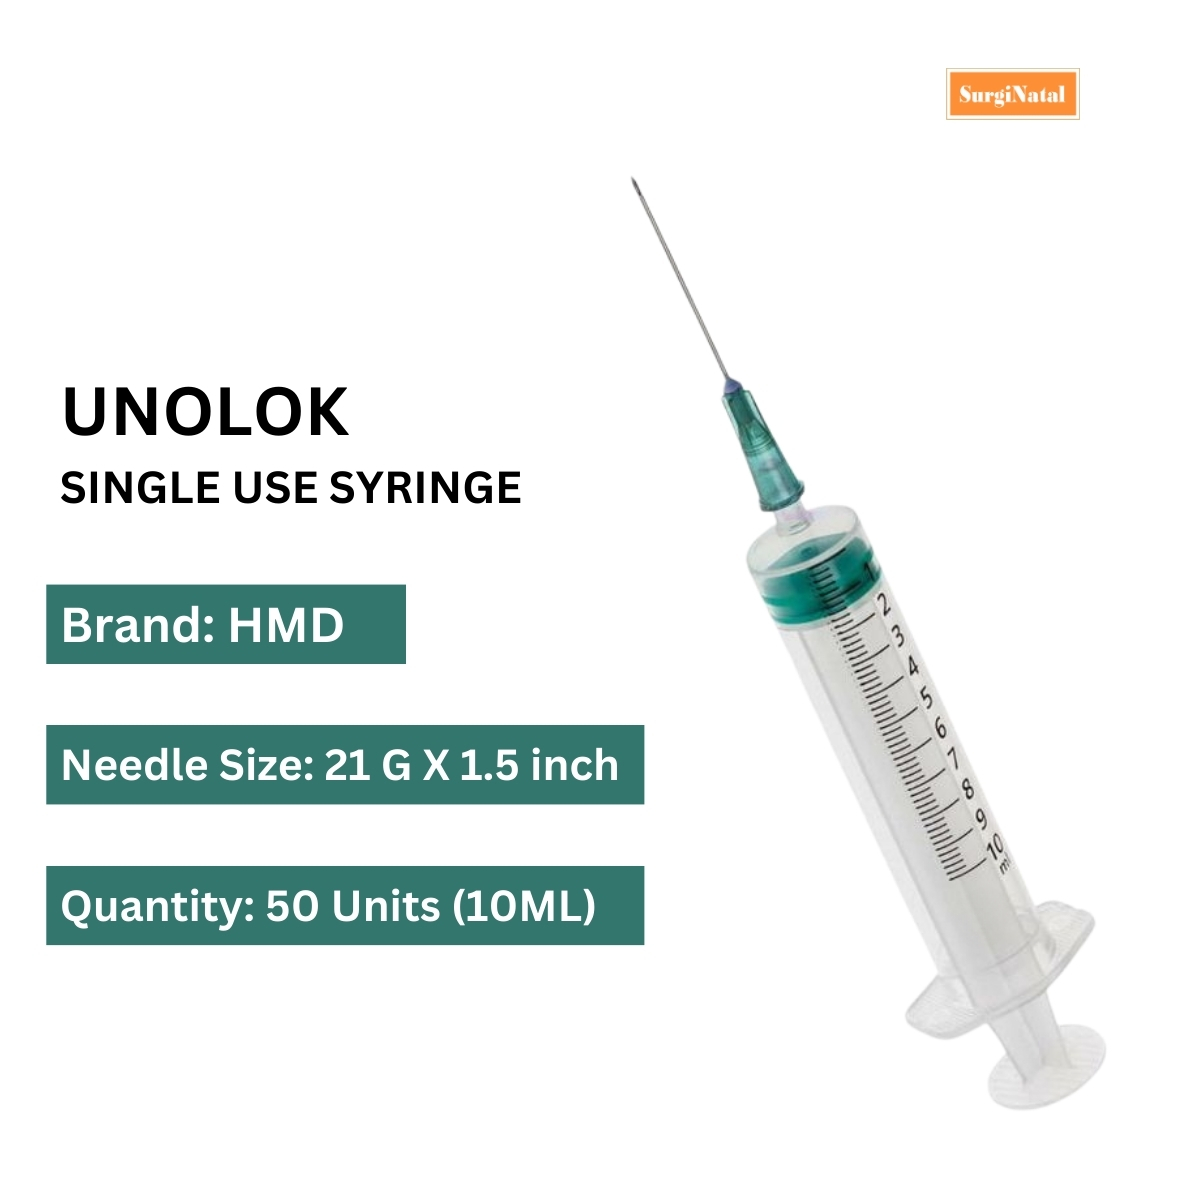 unolok hmd luer lock syringe 10ml with 21g*1.5 inch needle - 50 units pack